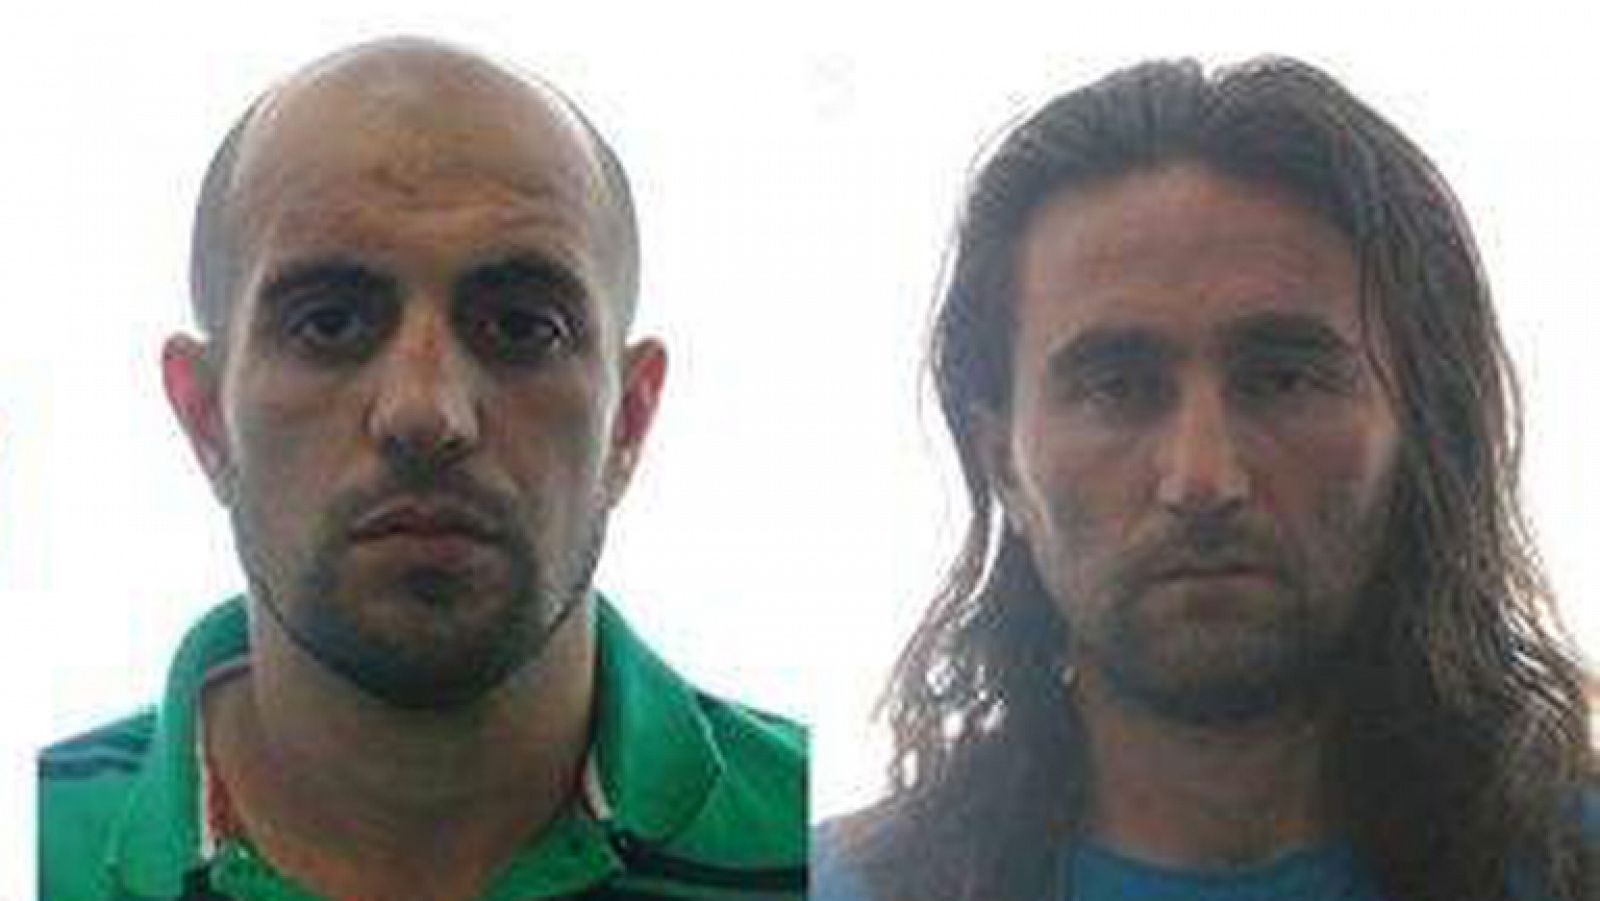 Telediario 1: Interrogados 2 presuntos islamistas | RTVE Play